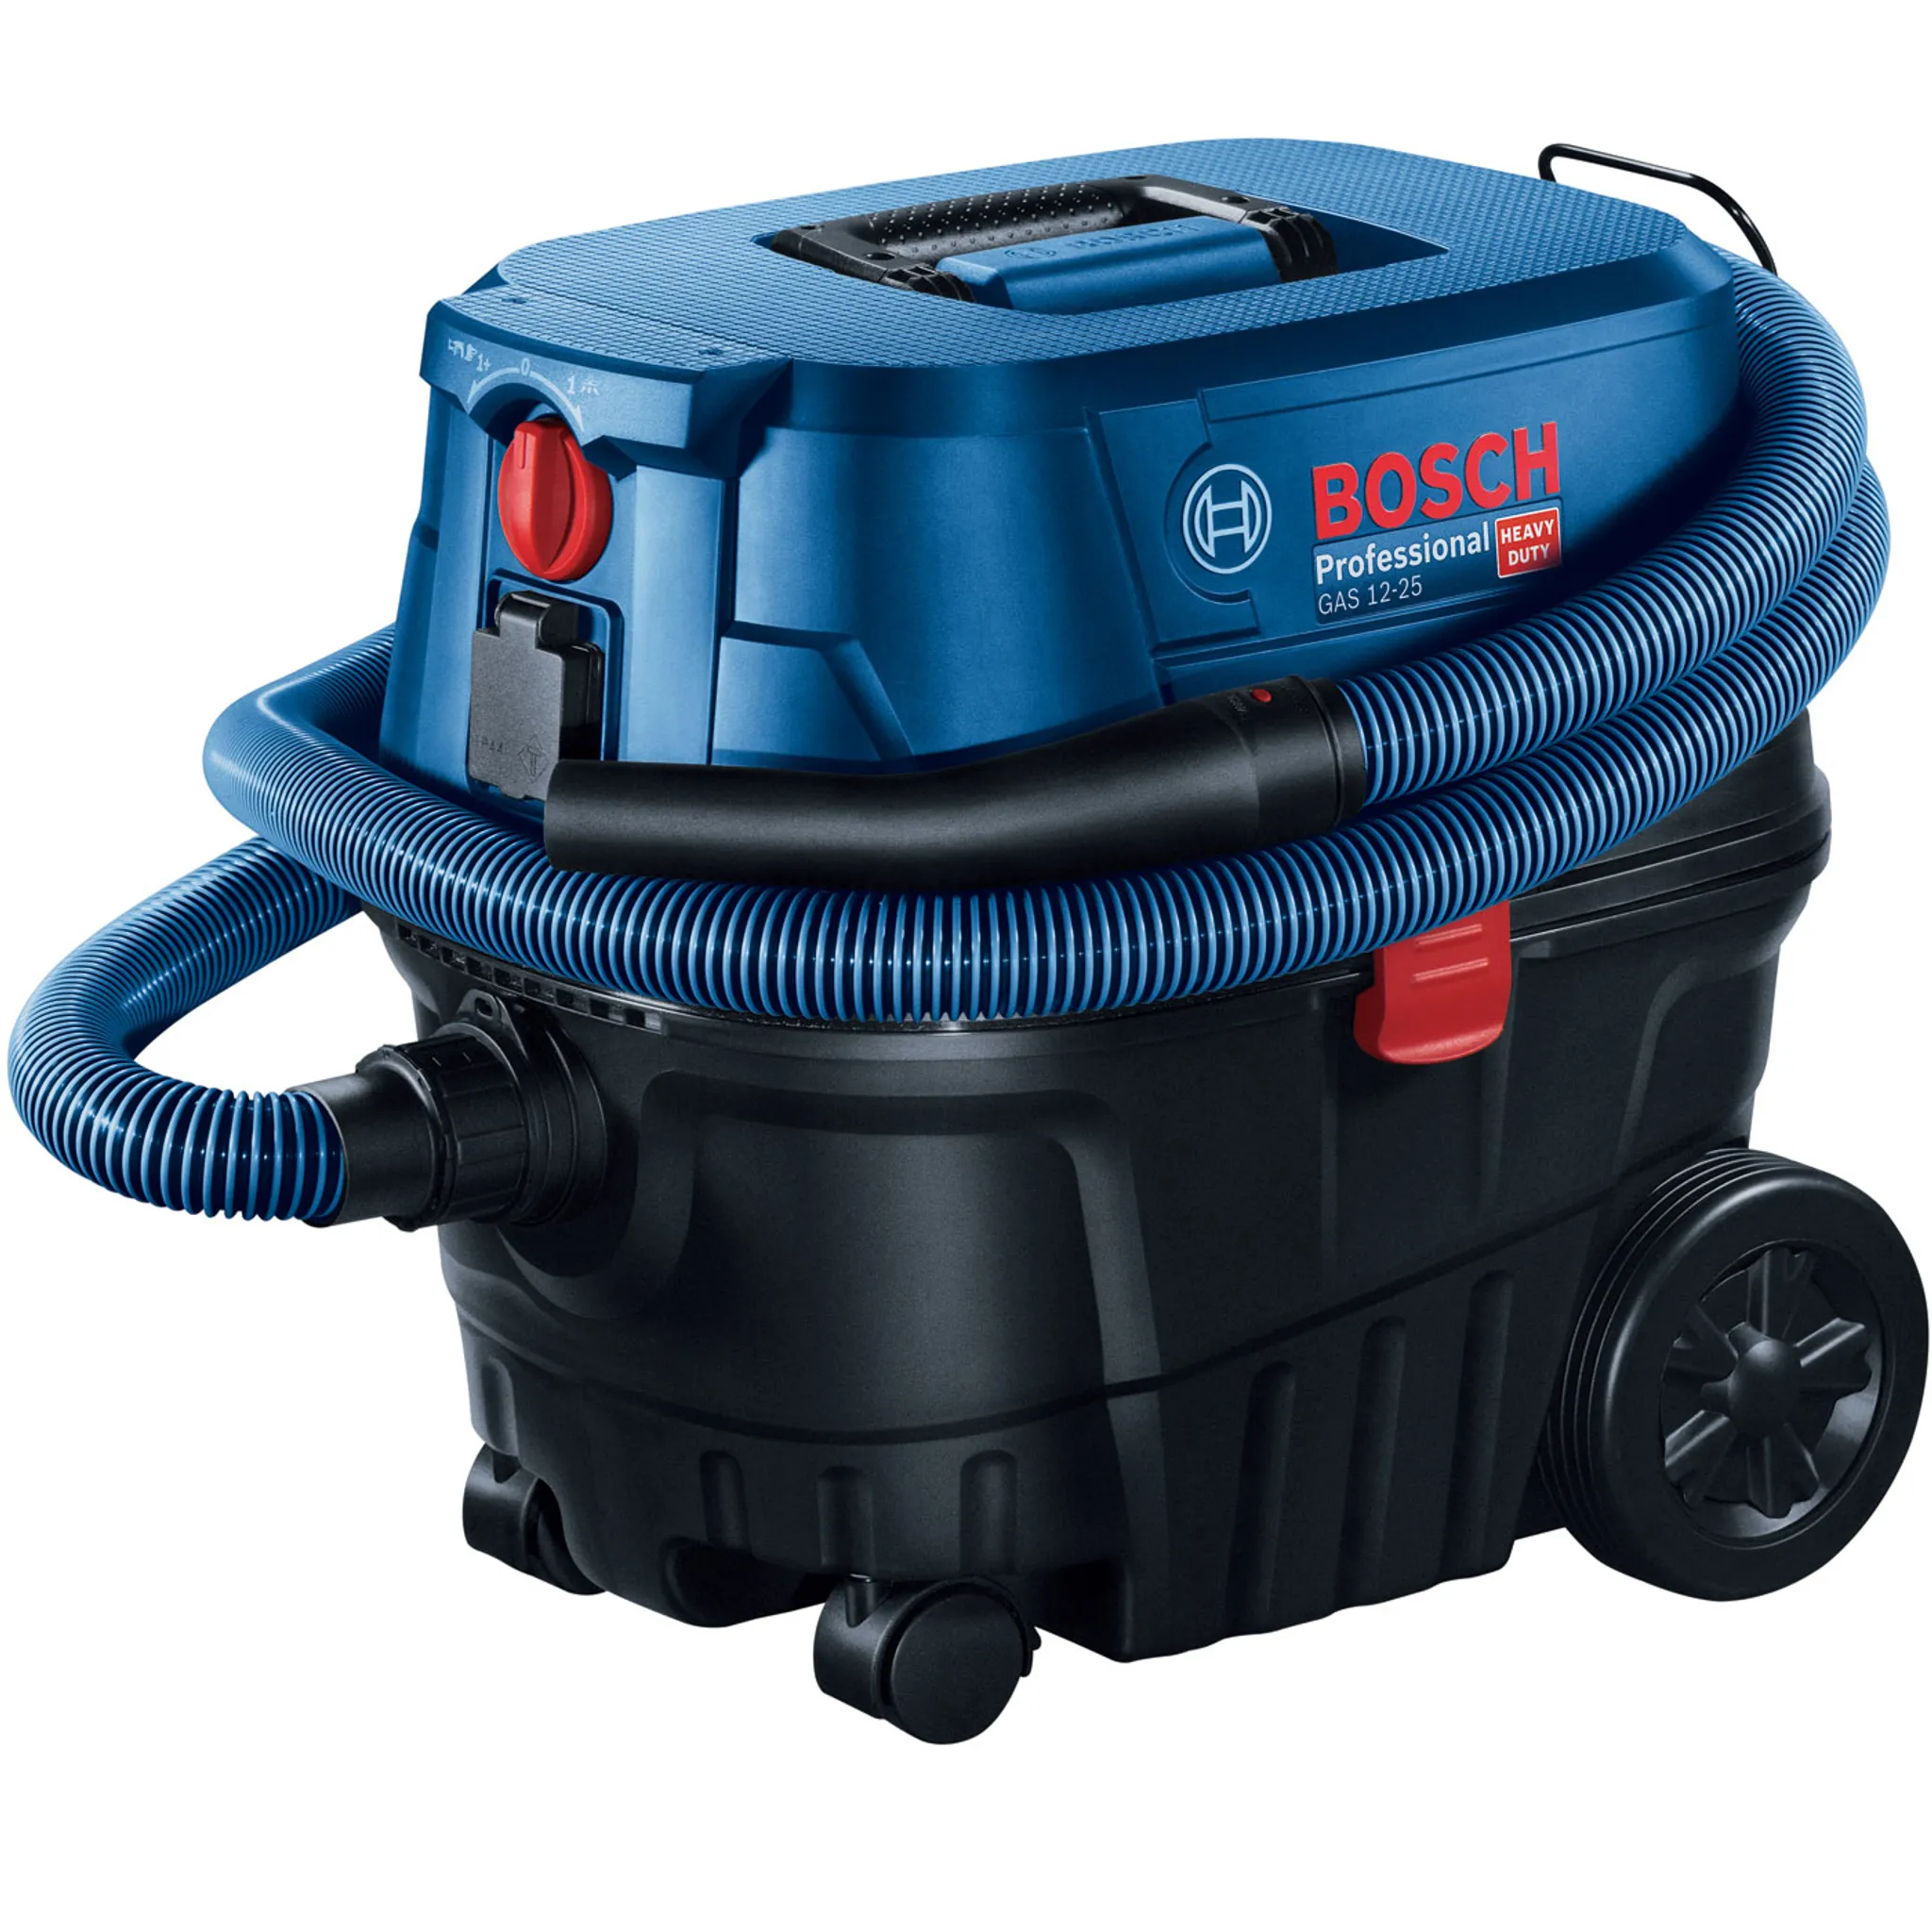 Professional 12-25 Bosch PL GAS